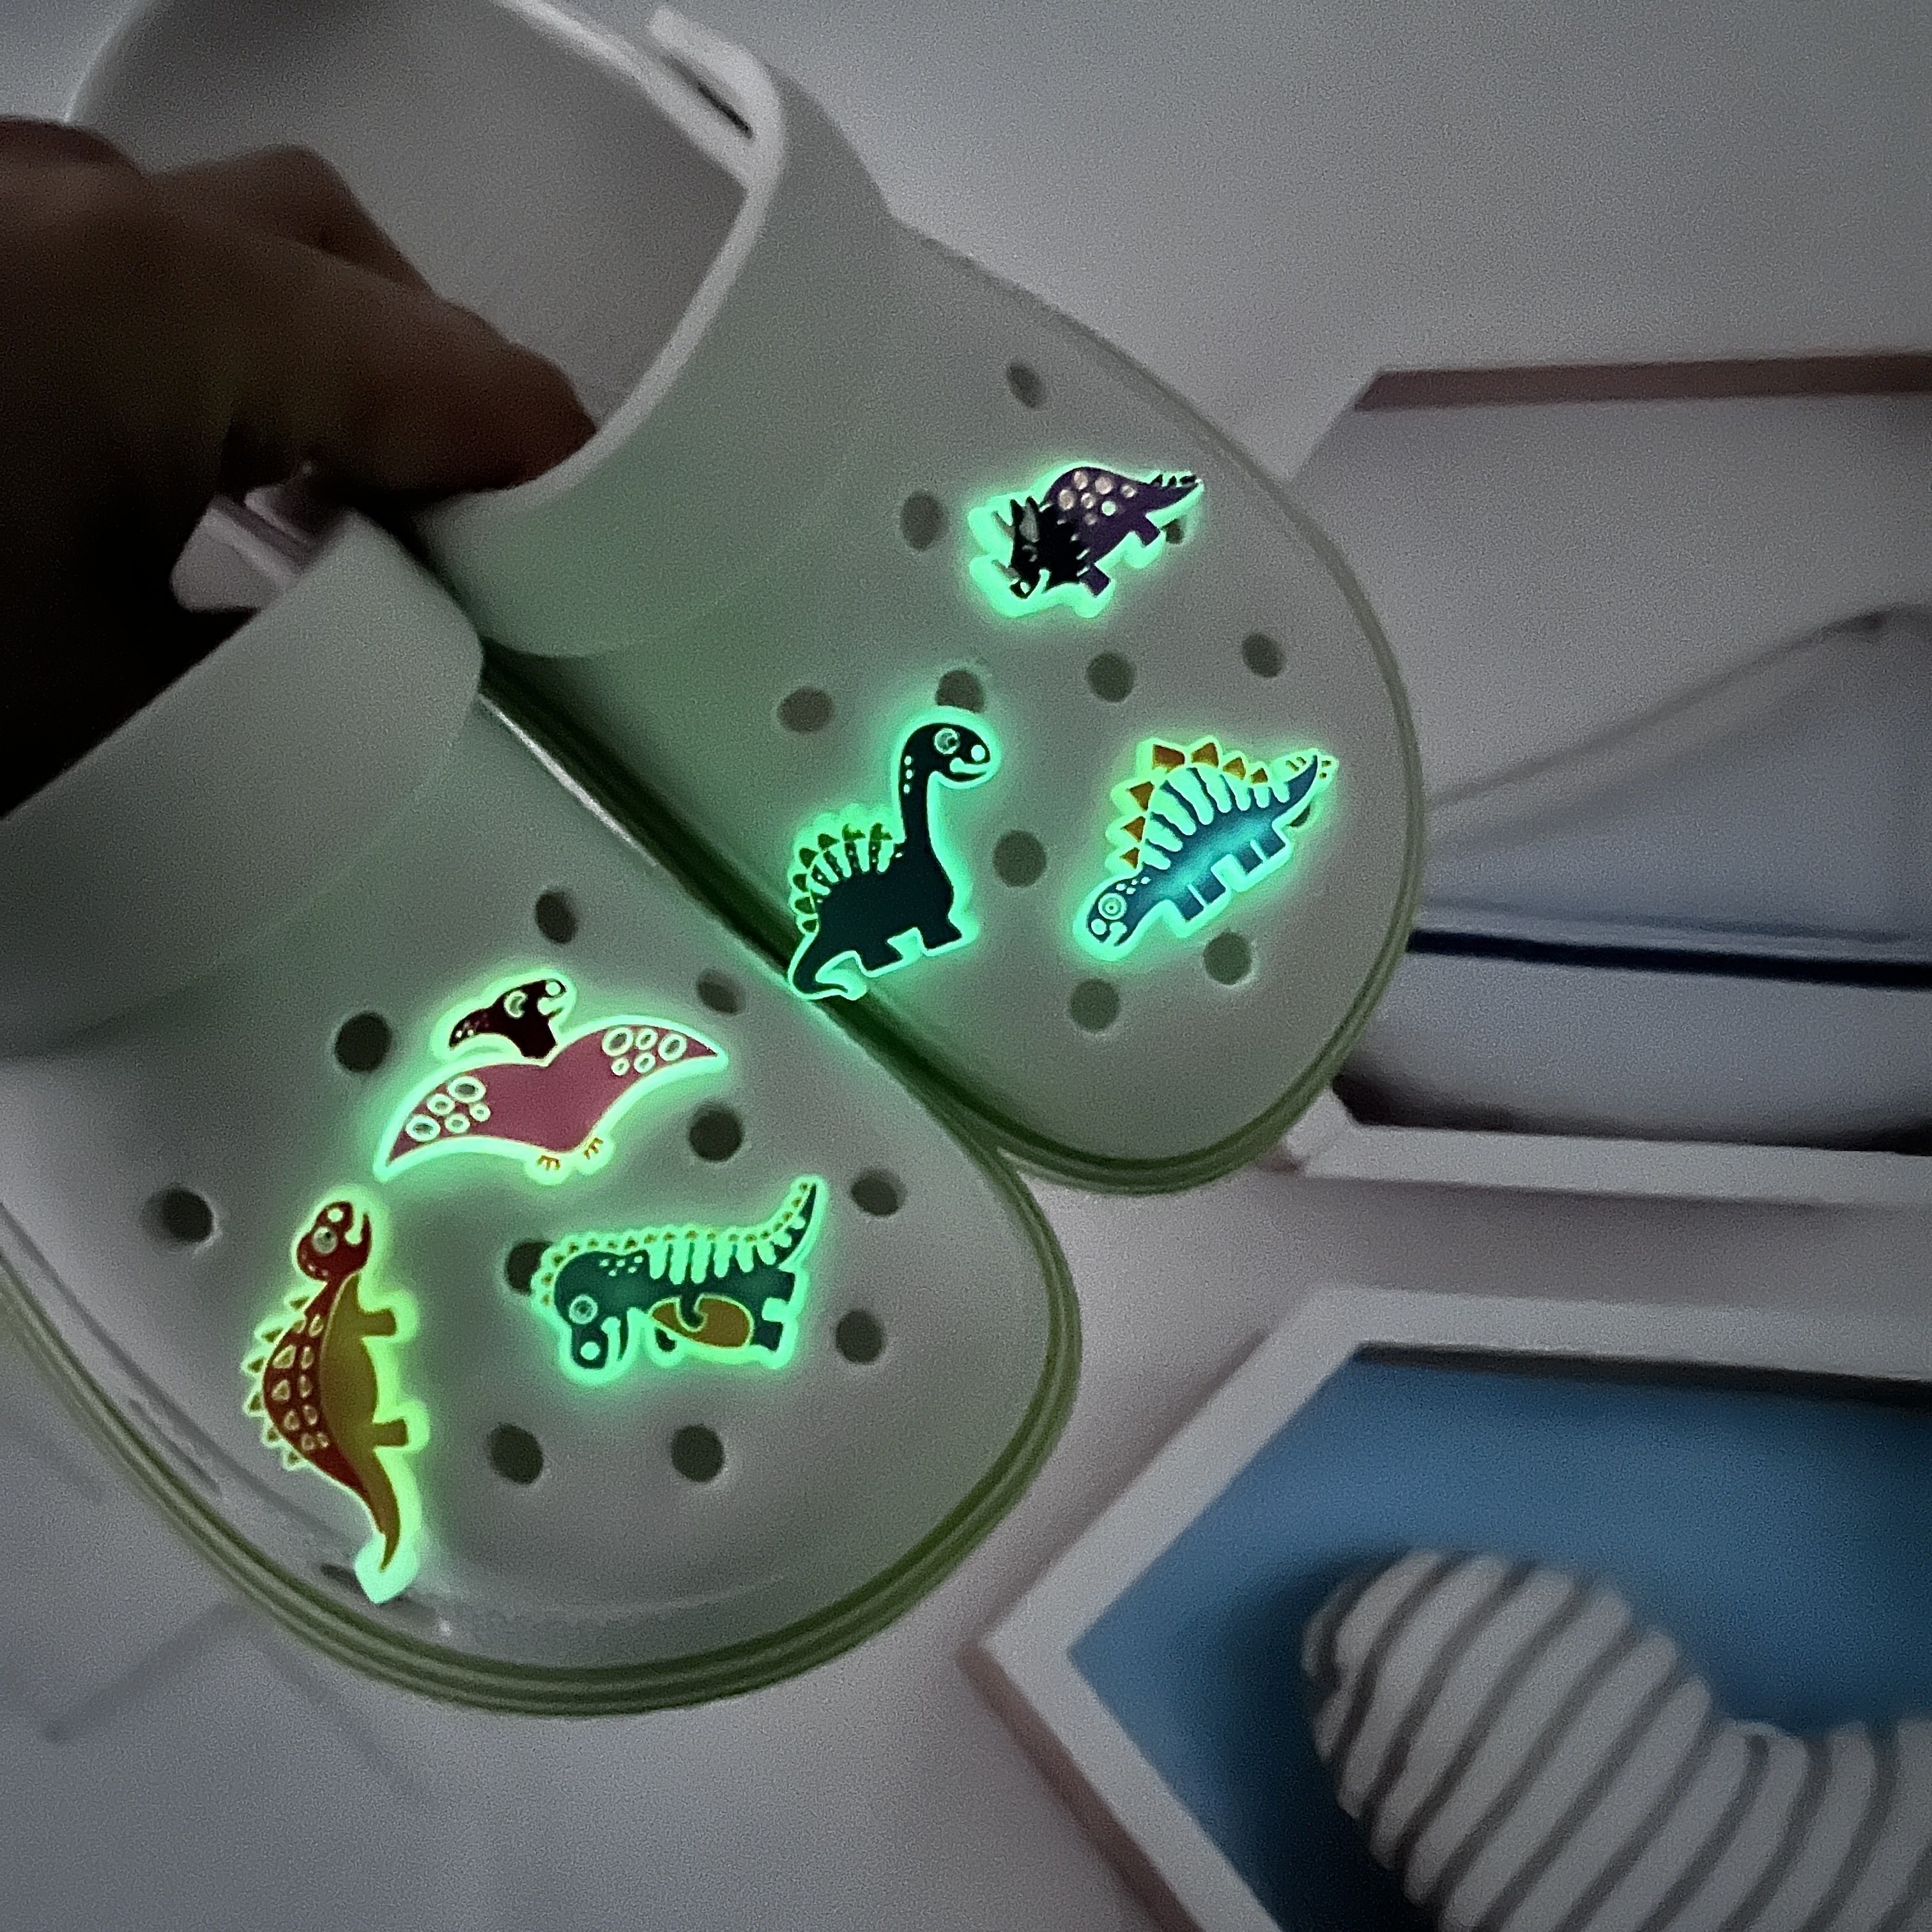 Shoe Charm For Crocs PVC Cute Cartoon Decoration Pin Anime Accessories Pack  Kids